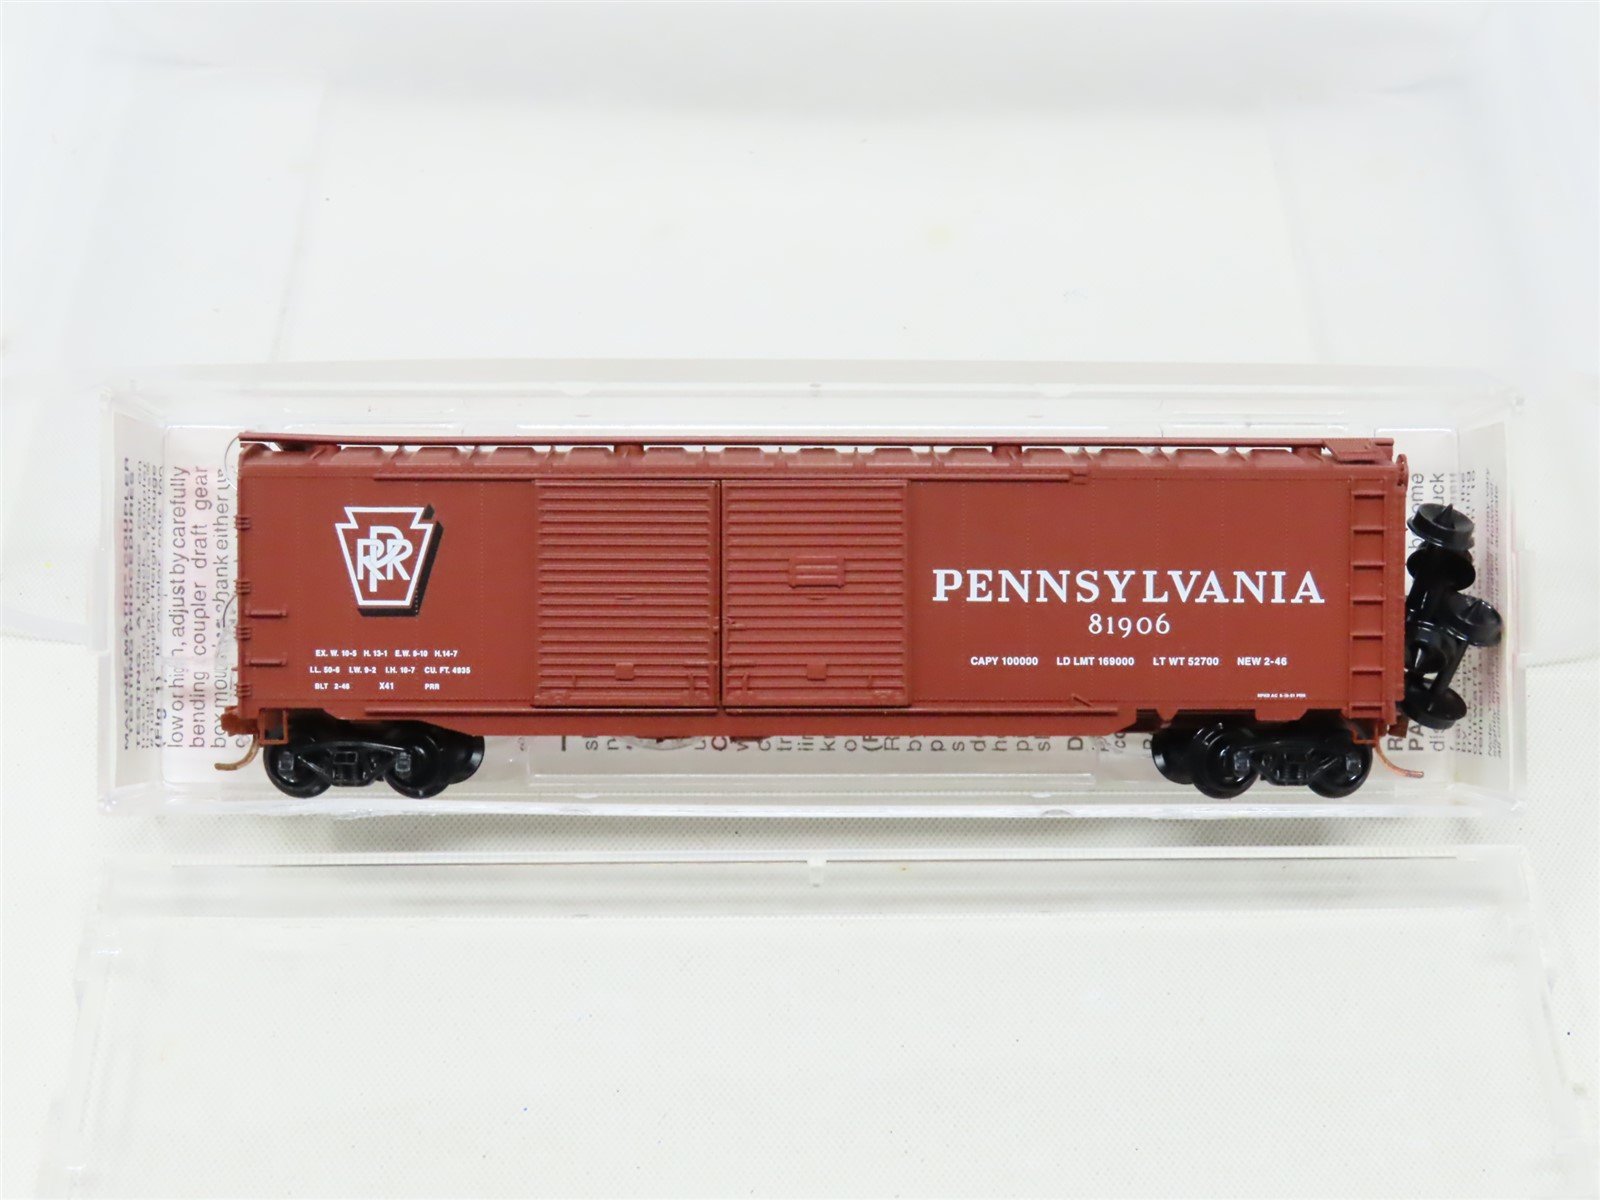 N Scale Micro-Trains MTL 78010 PRR Pennsylvania Boxcar #82023